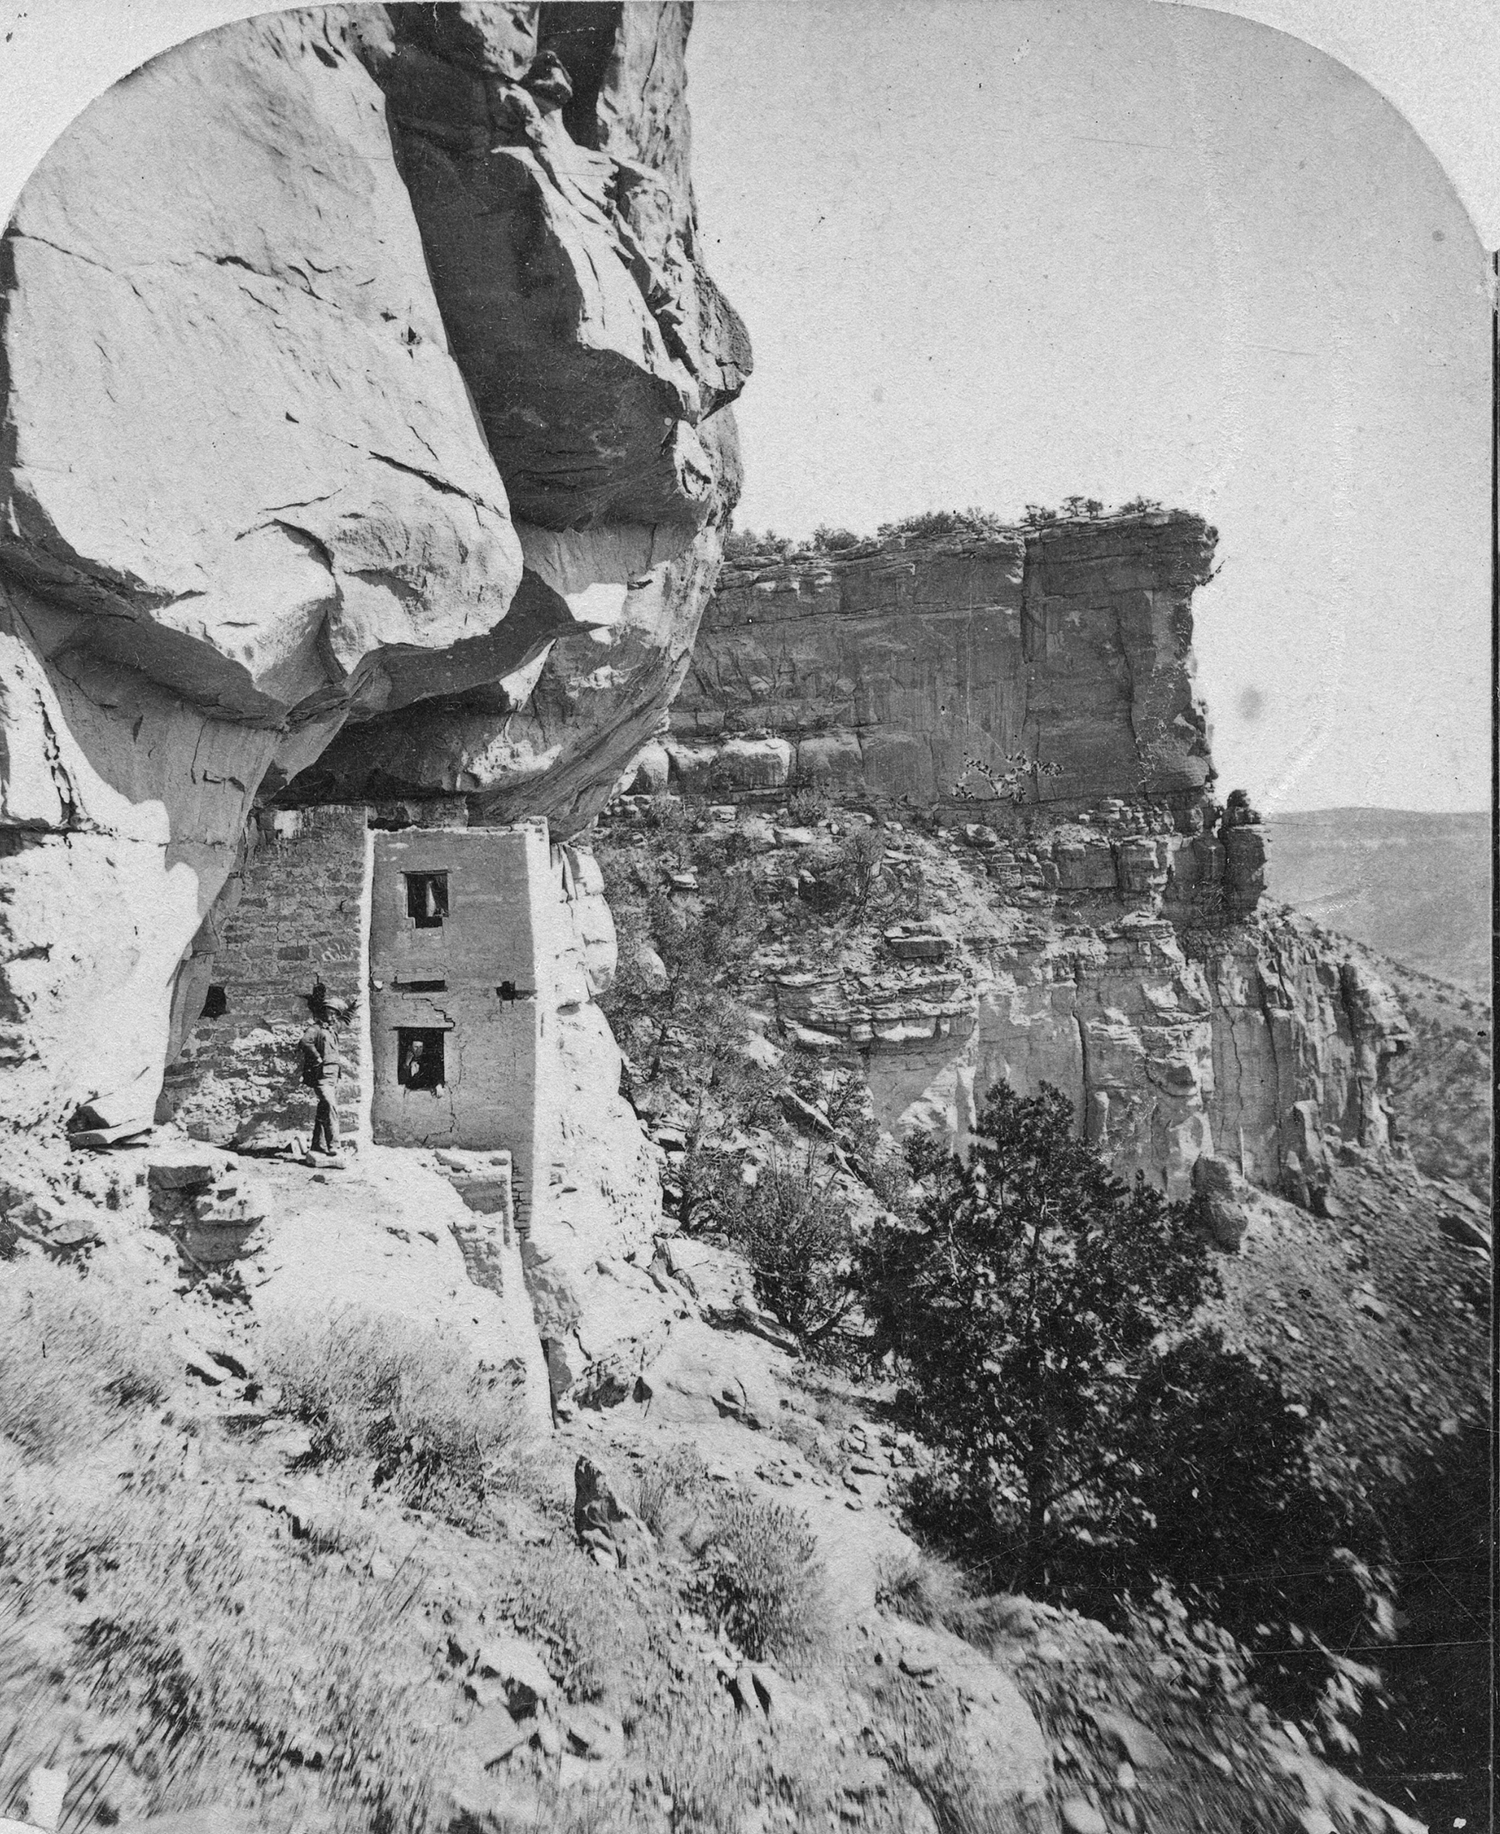 Mancos Canyon cliff dwellings